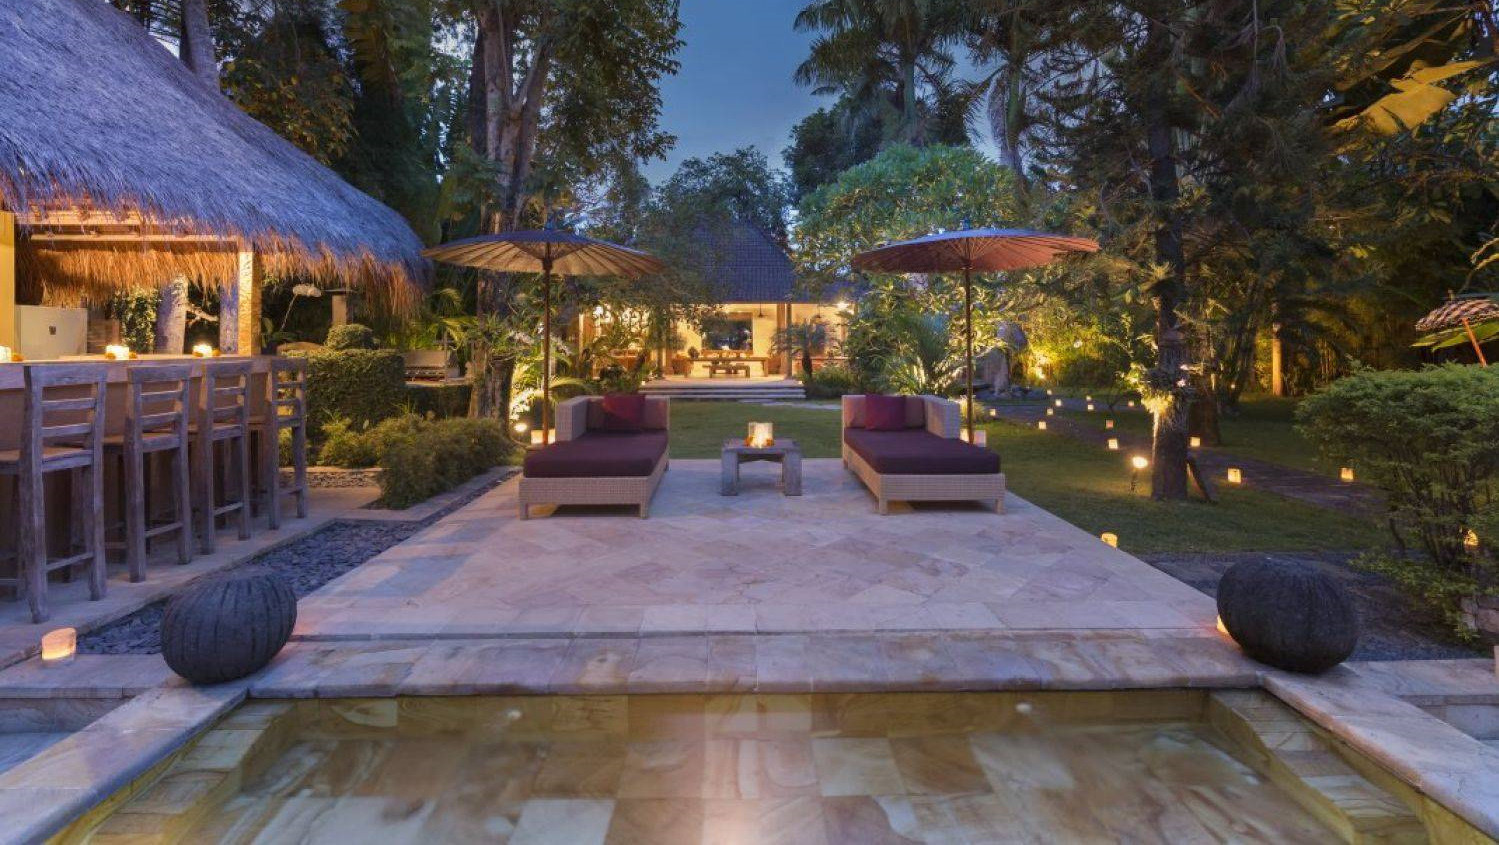 Villa Red Palms in Umalas, Bali (3 bedrooms) - Best Price & Reviews!